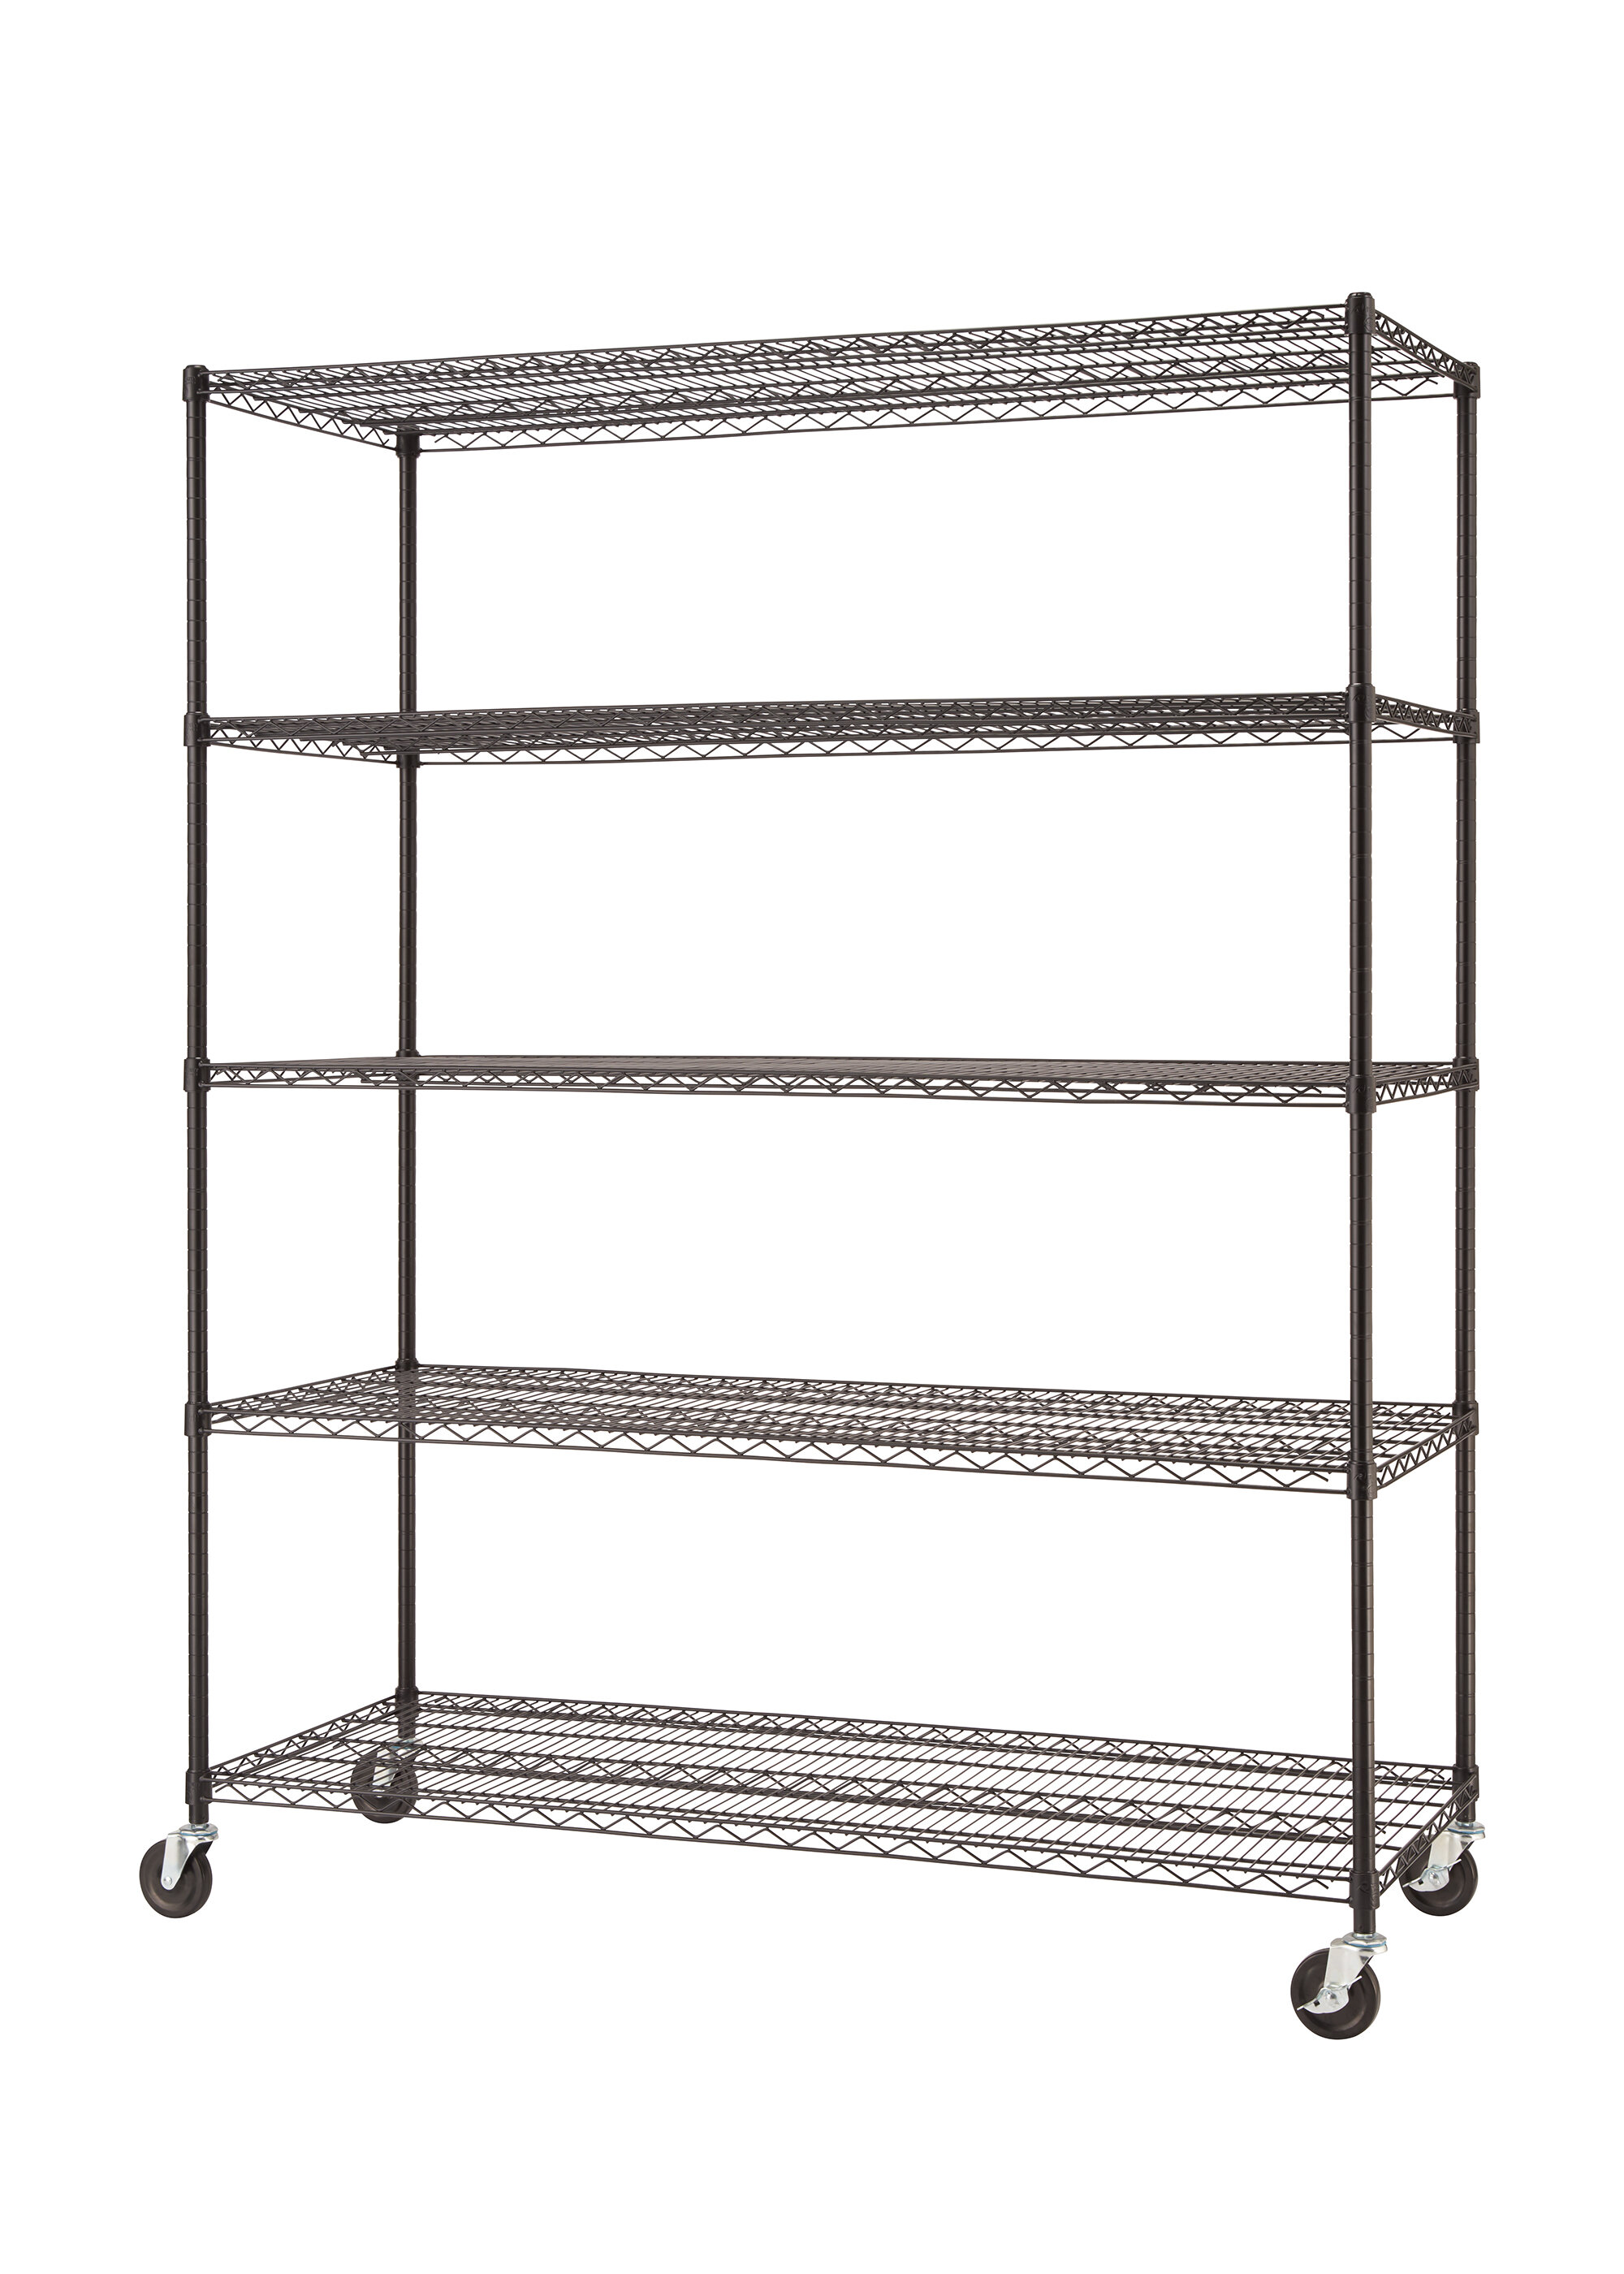 Rack 5 Shelves 48 W 24 D 72 H Black Storage Garage Adjustable new organizer 